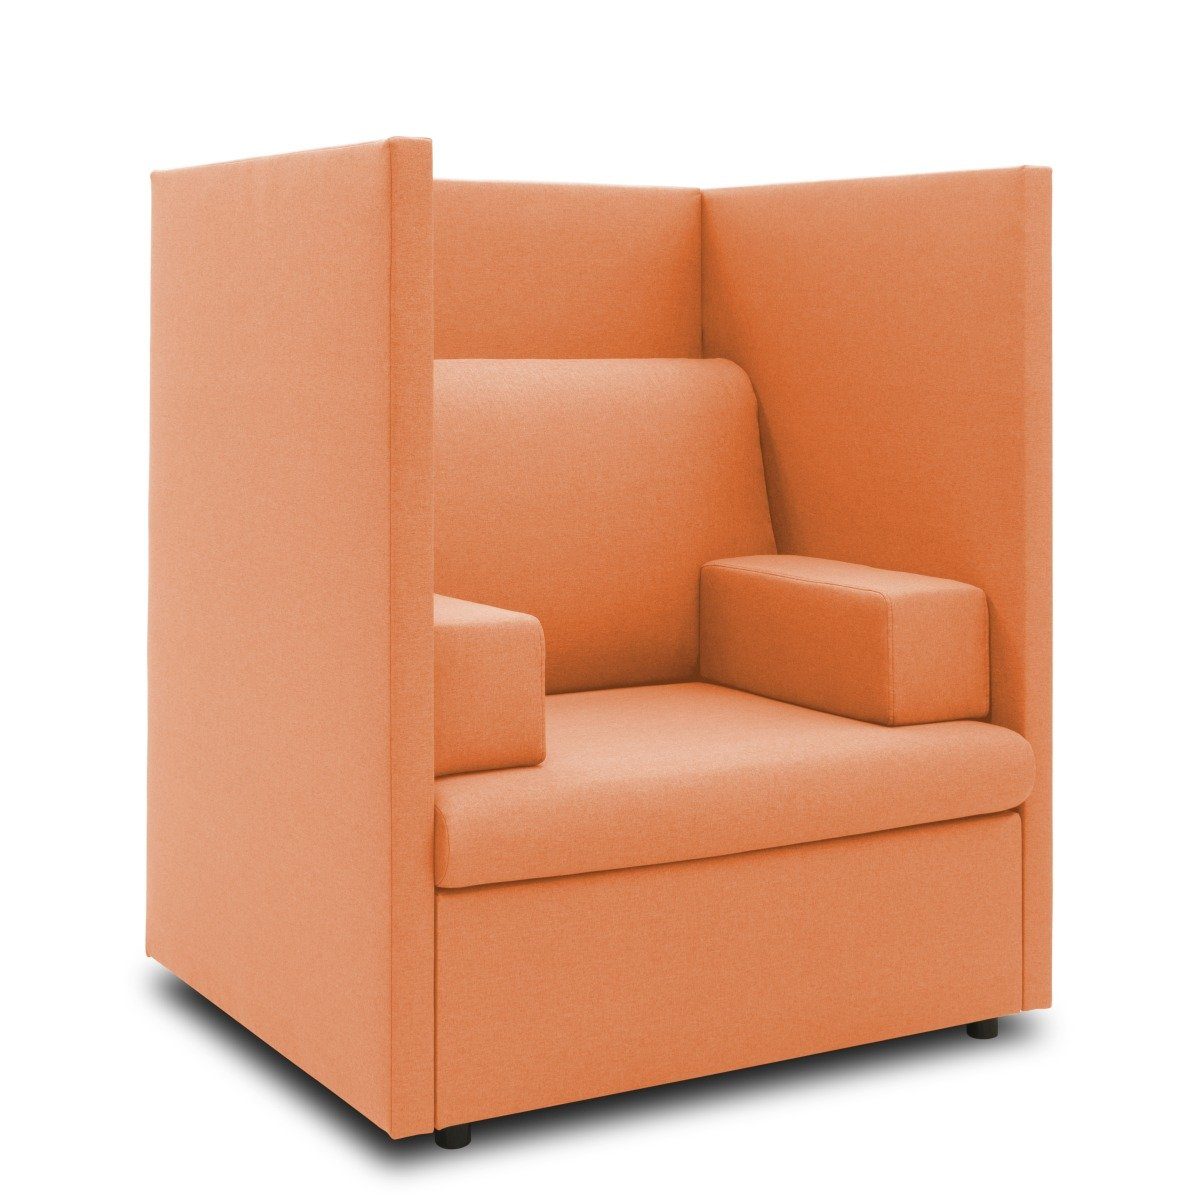 Pickup-Möbel Sofa Outdoor Gartensofa Einsitzer Sessel wetterfest Sylt, 1, 1 Teile, wetterfest